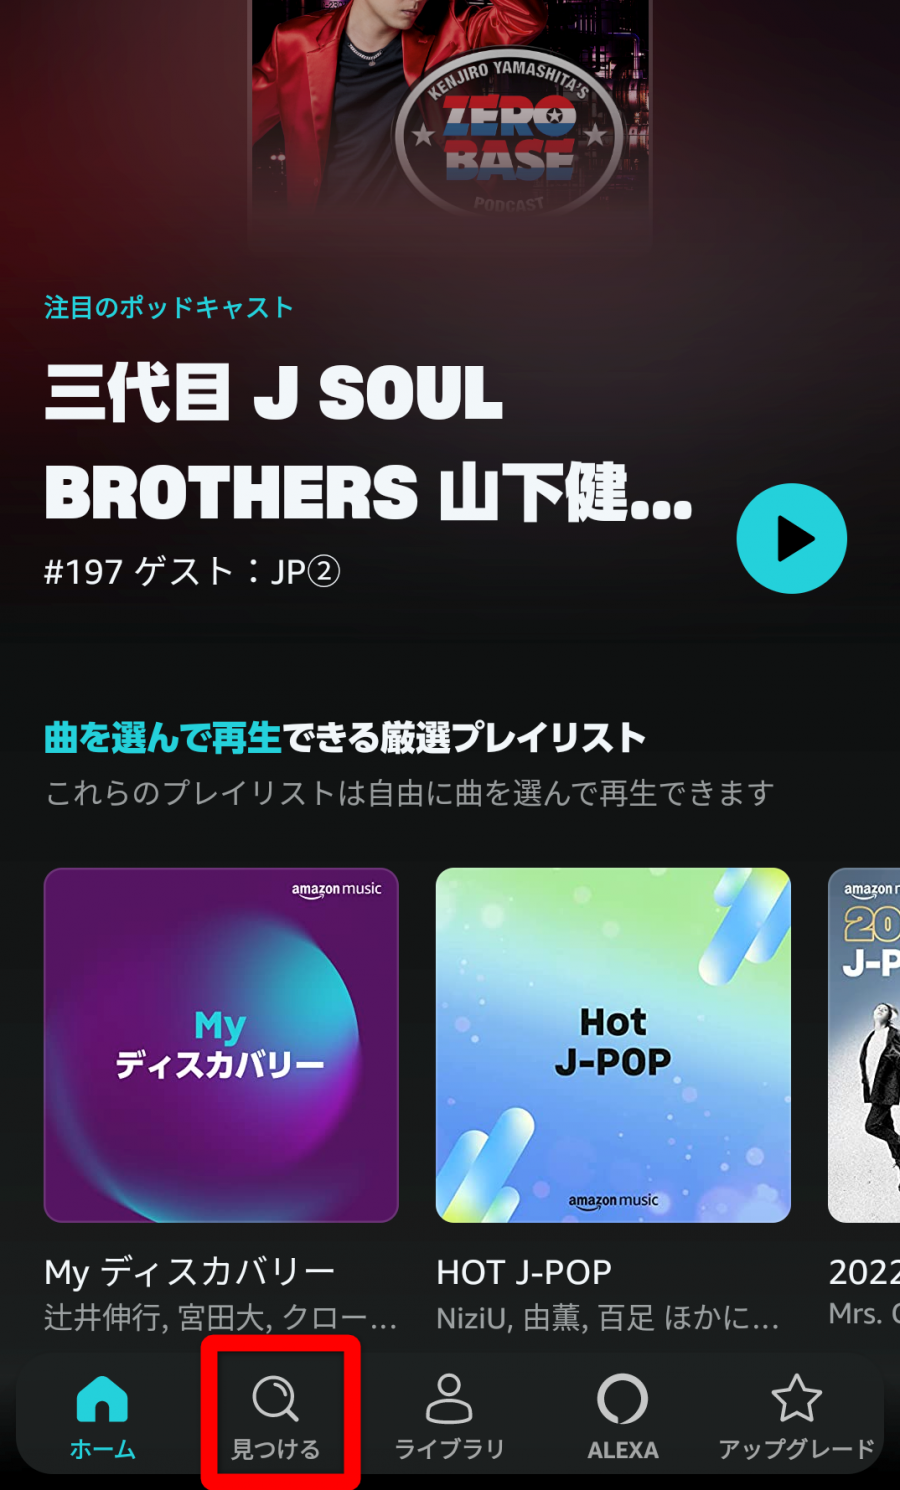 Amazon Music アプリホーム画面